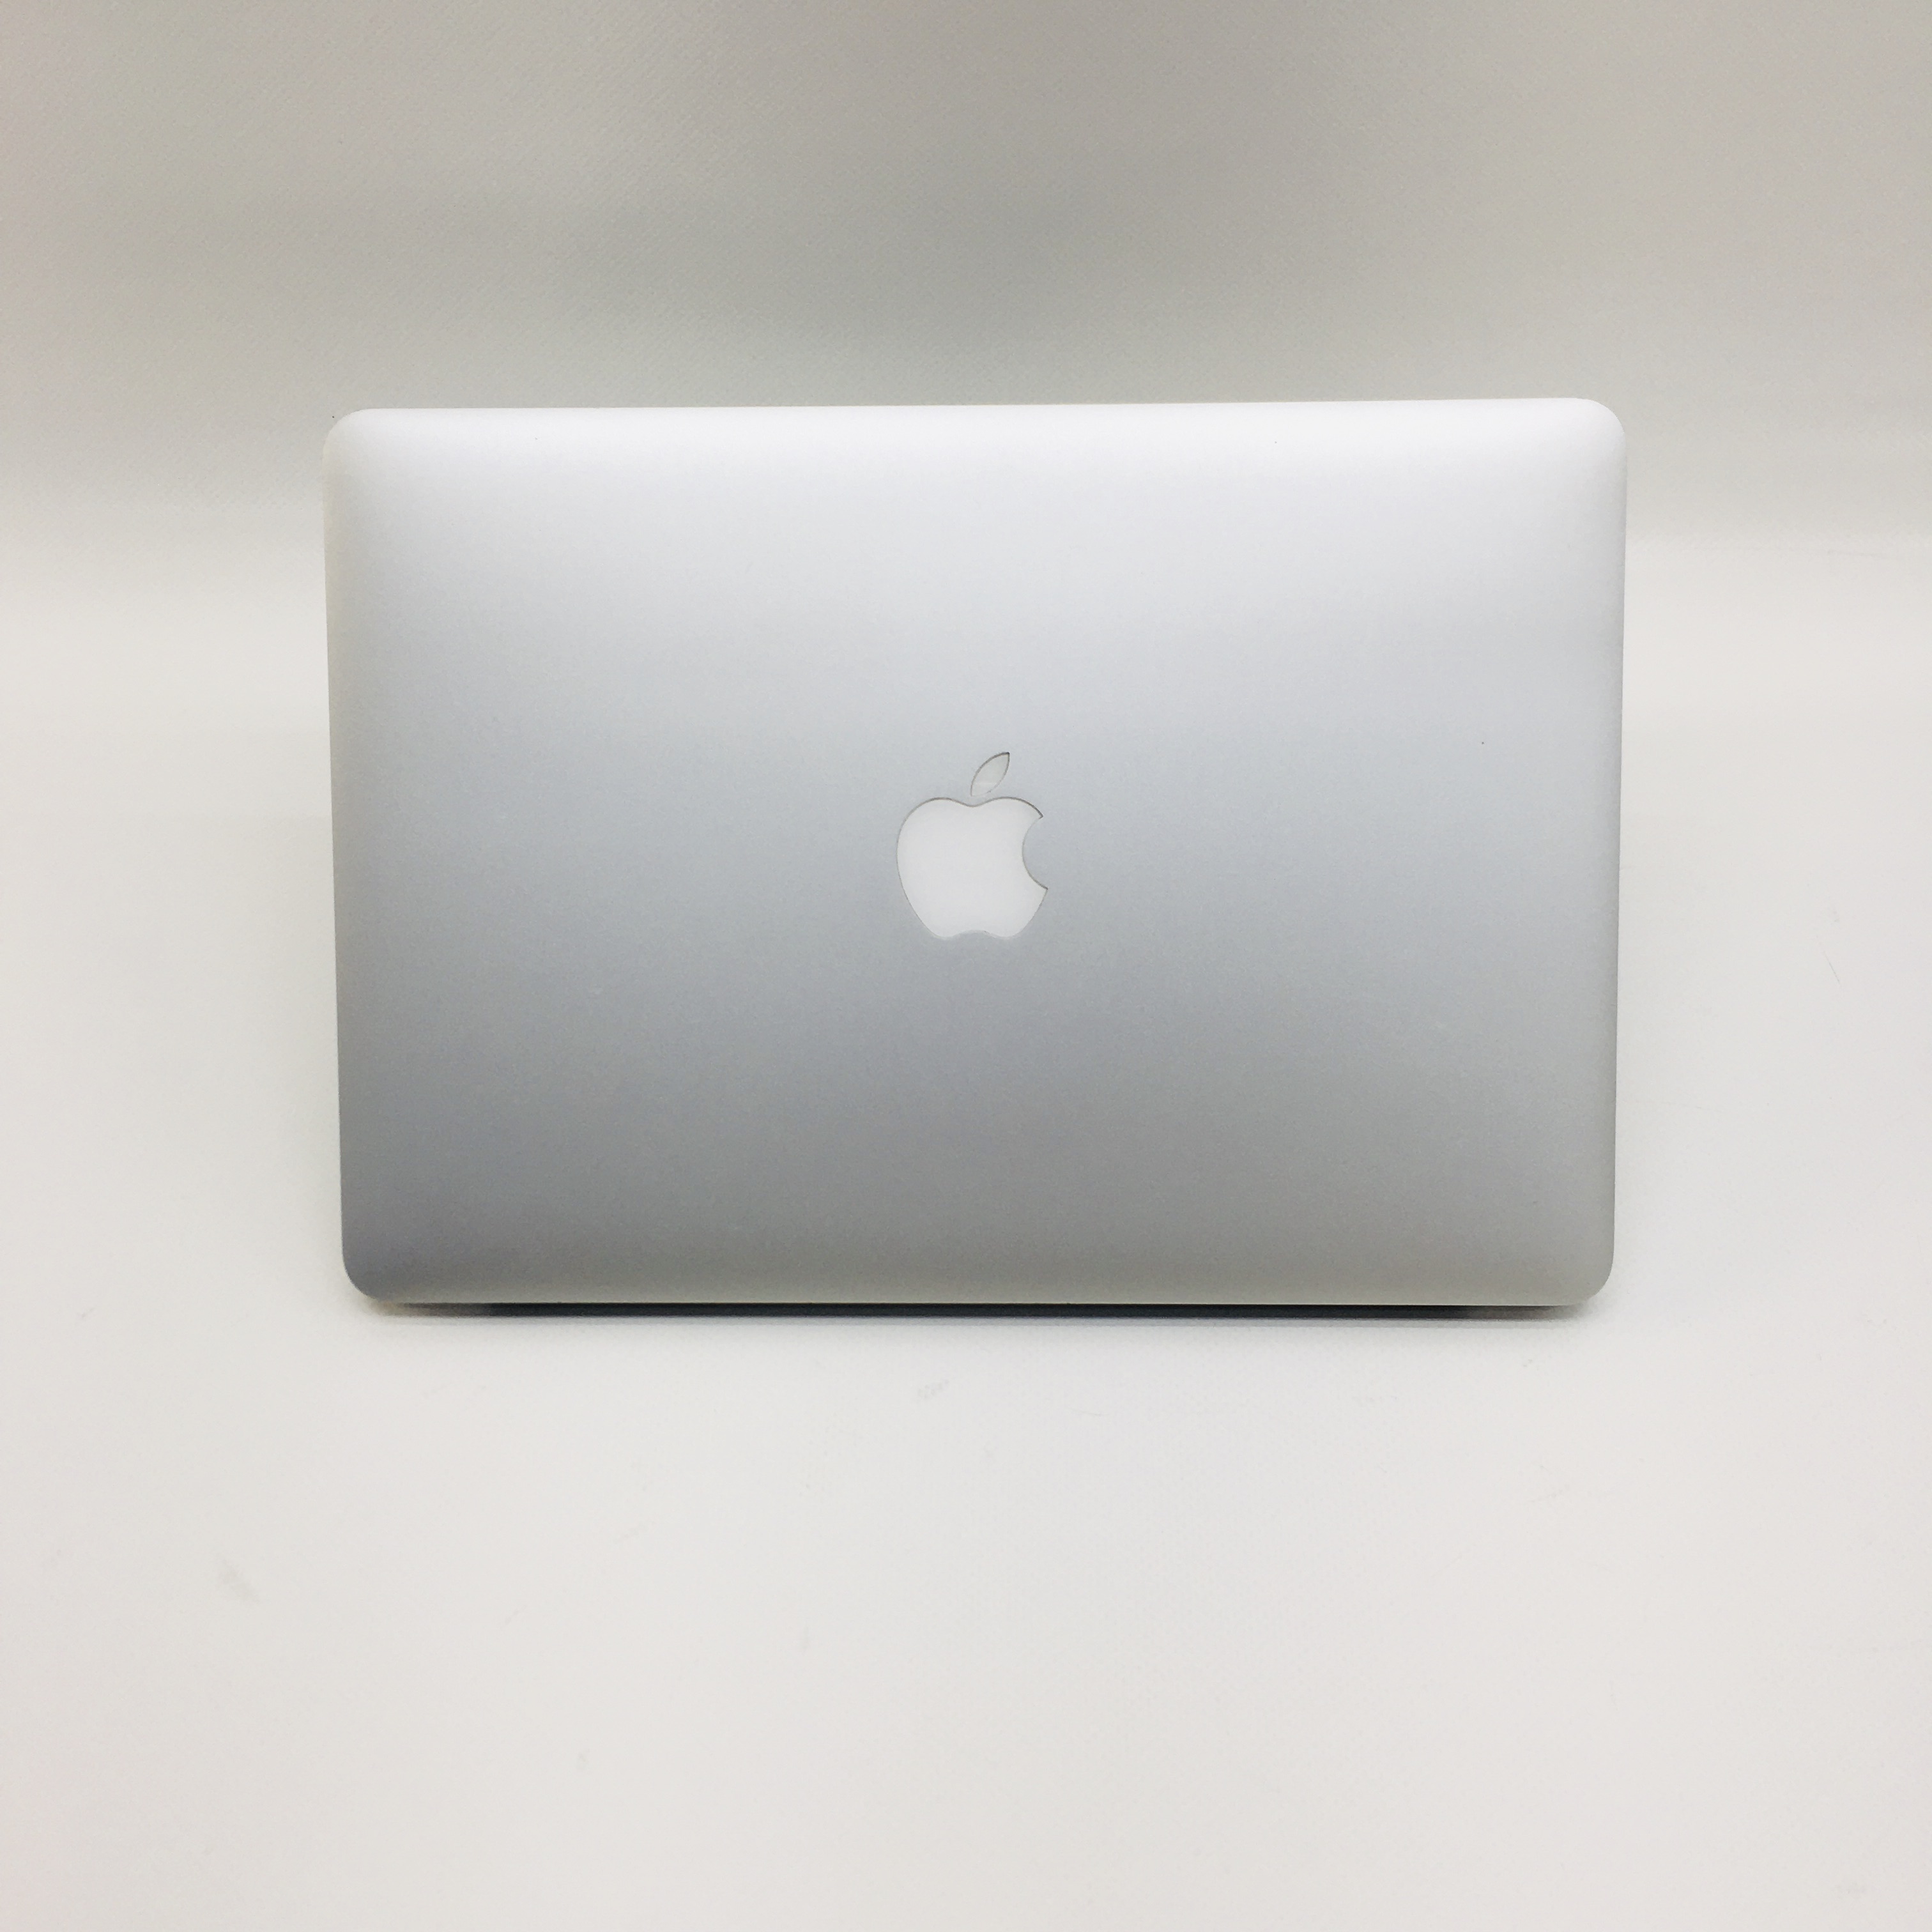 MacBook Air 13" Early 2015 (Intel Core i5 1.6 GHz 8 GB RAM 256 GB SSD), Intel Core i5 1.6 GHz, 8 GB RAM, 256 GB SSD, image 4